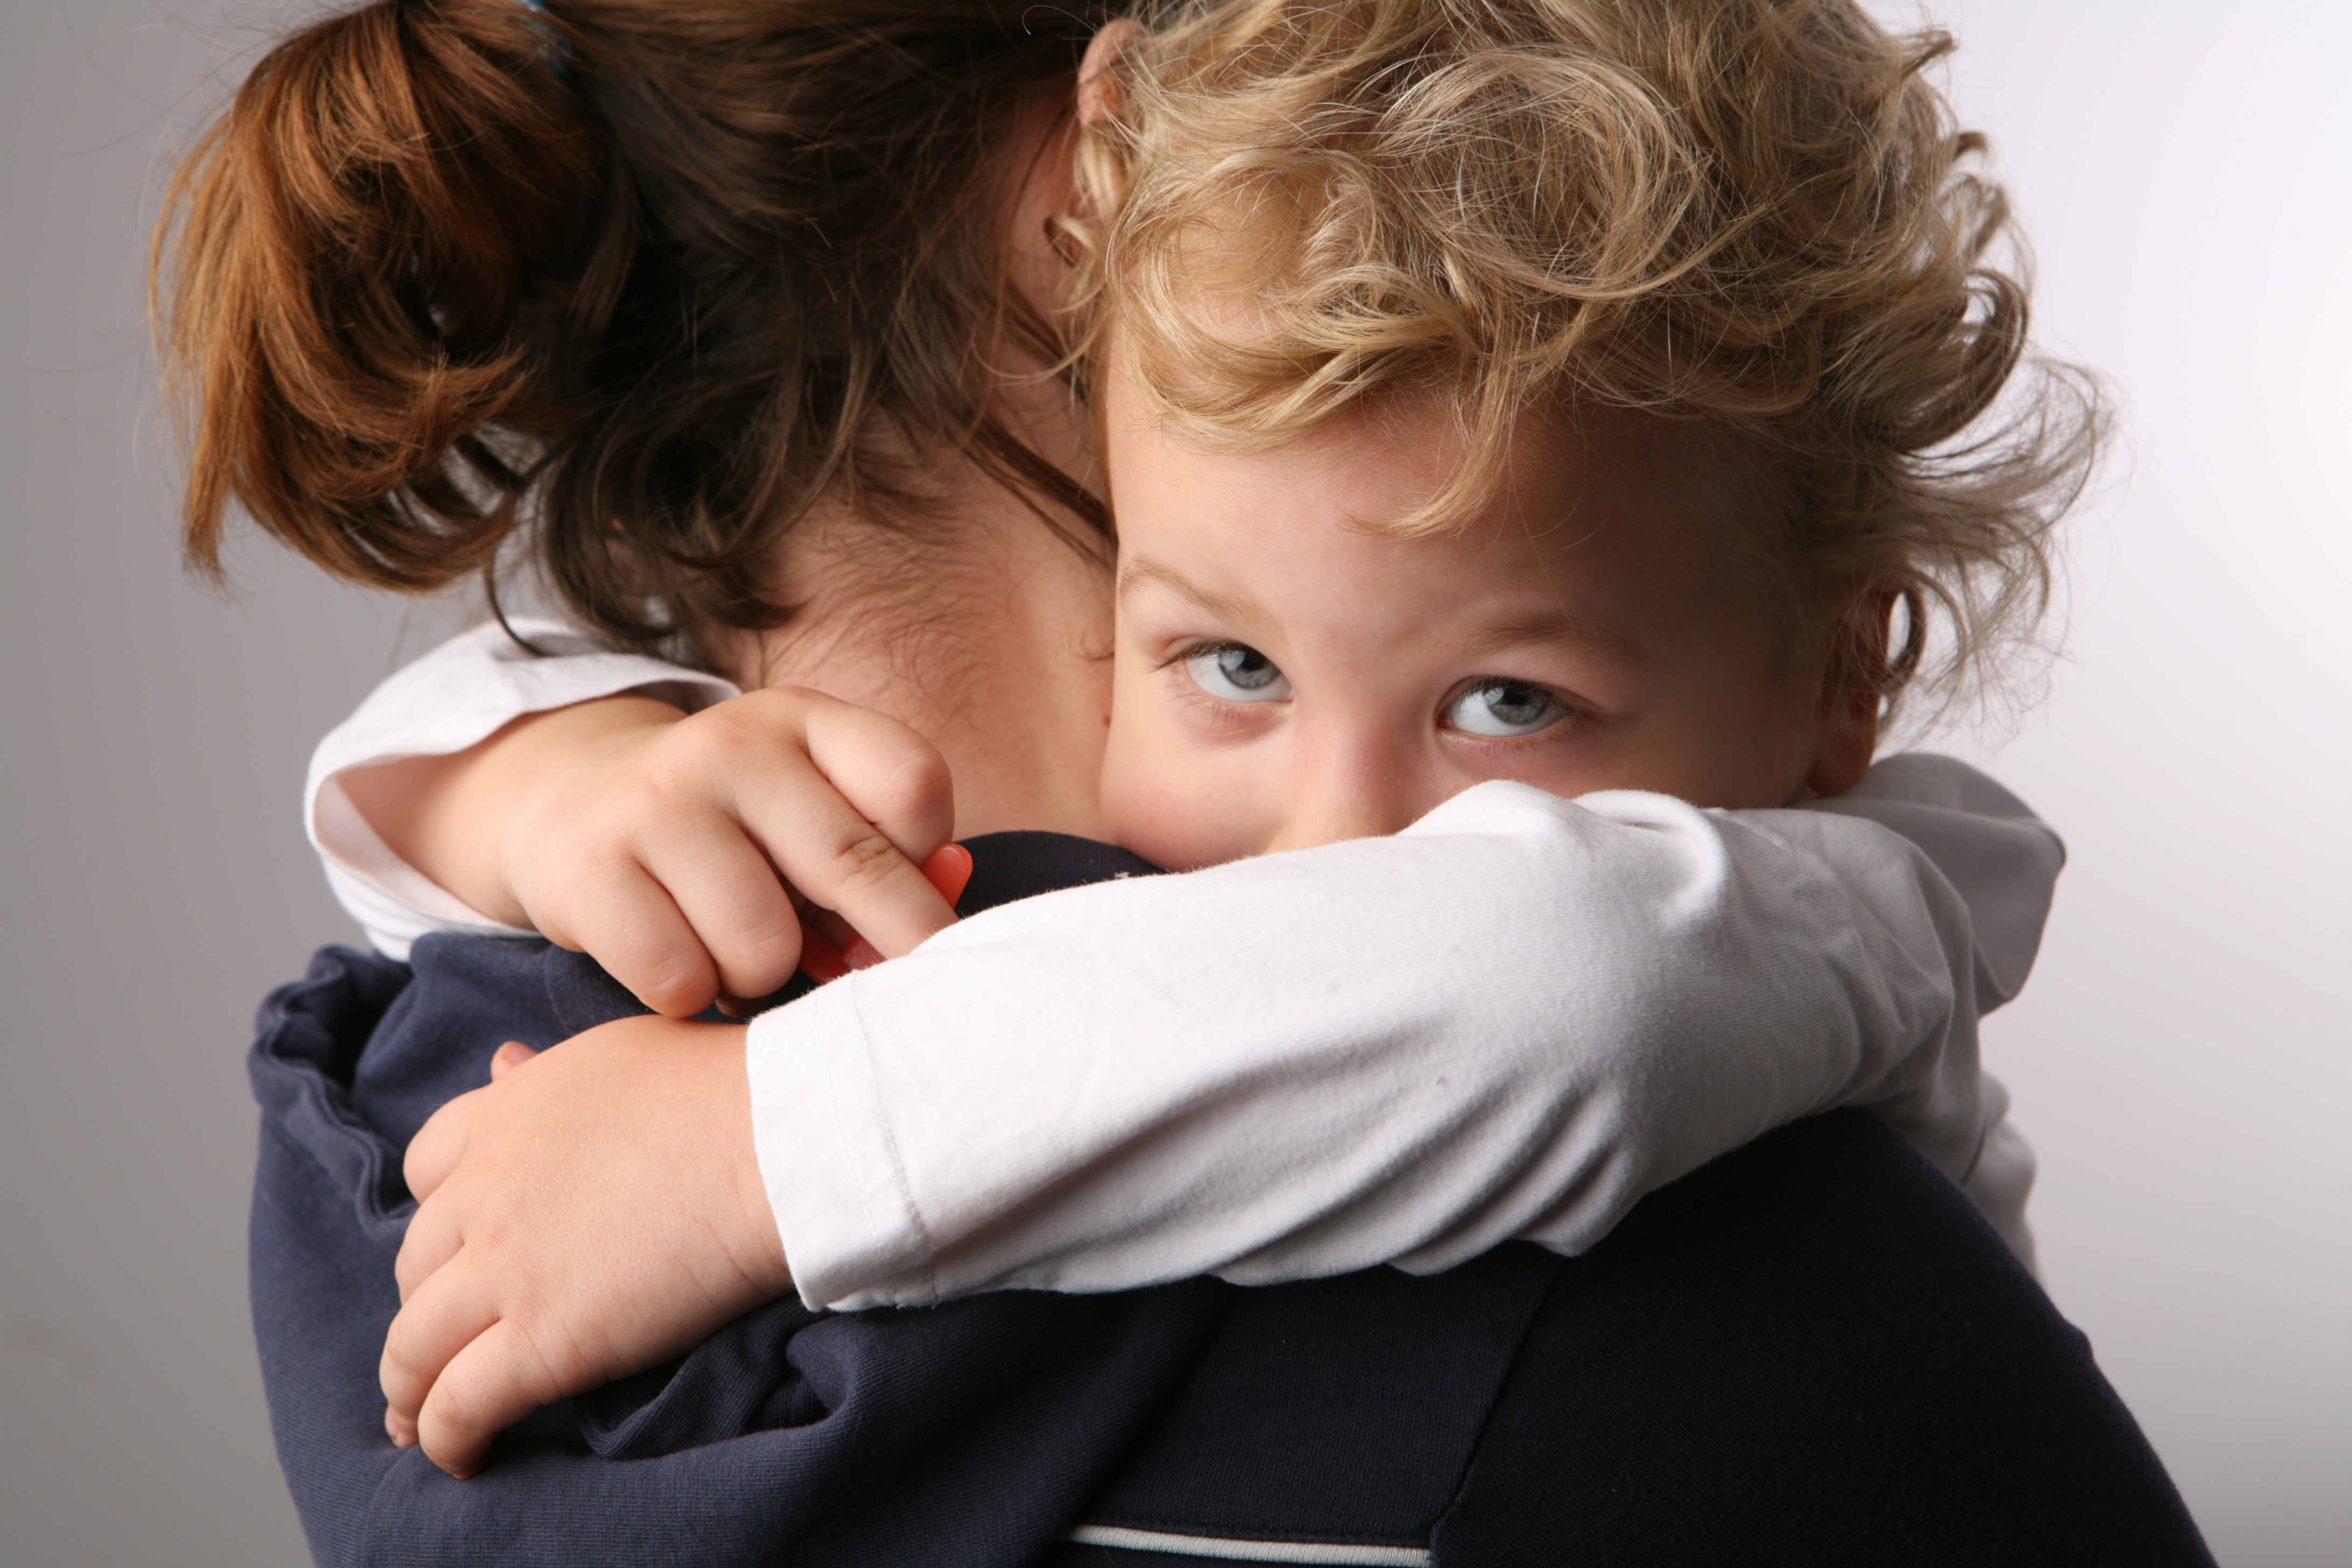 A child embraces his mother. Image courtesy of Boumen Japet va Shutterstock